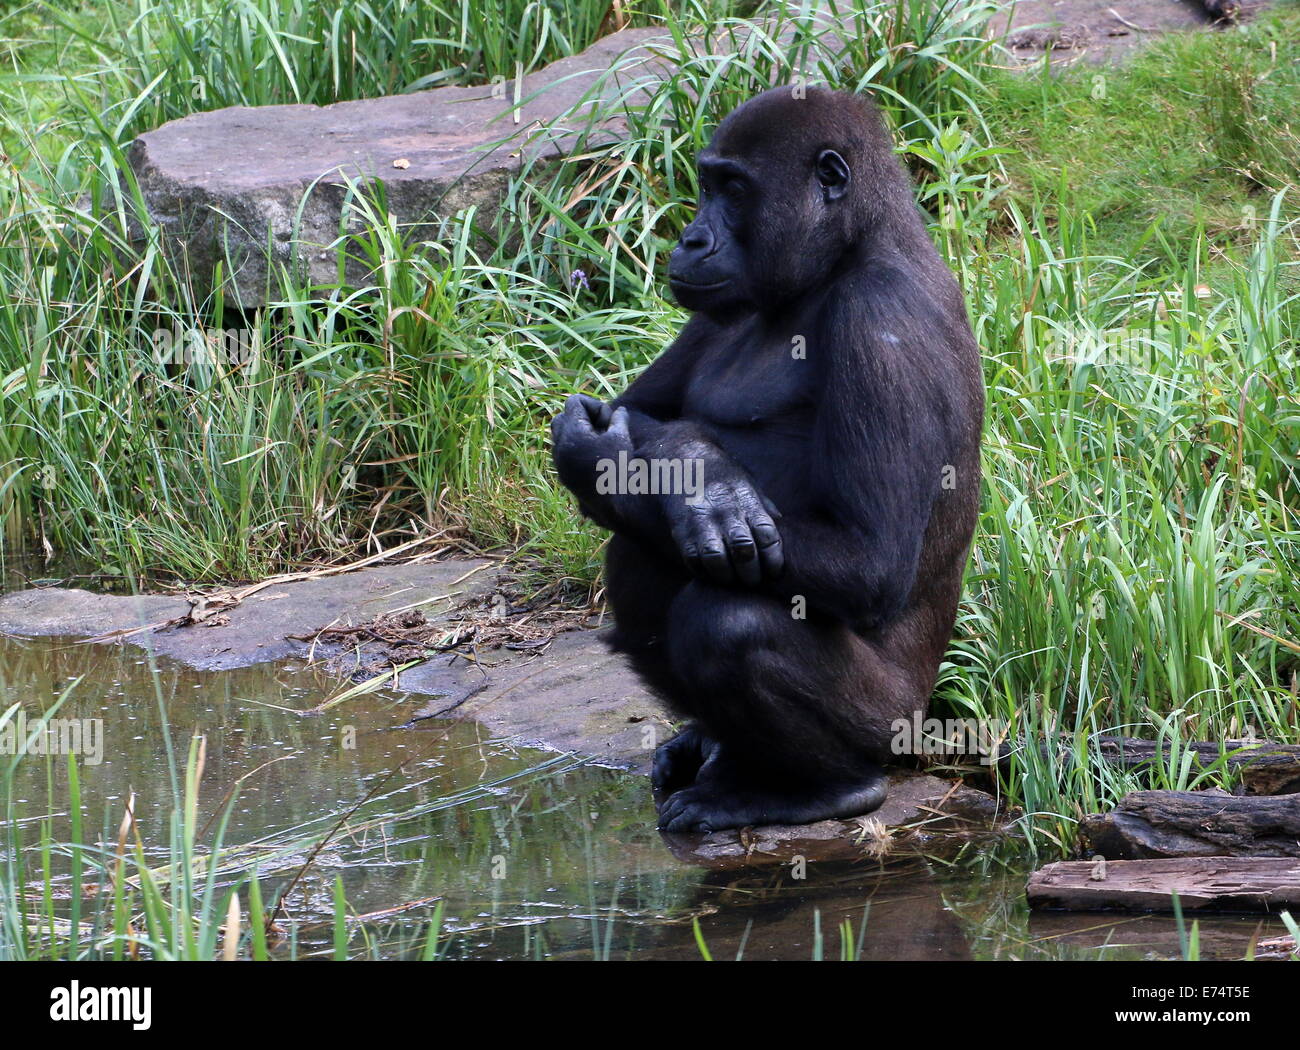 Western lowland gorilla at the water's edge, sitting still Stock Photo